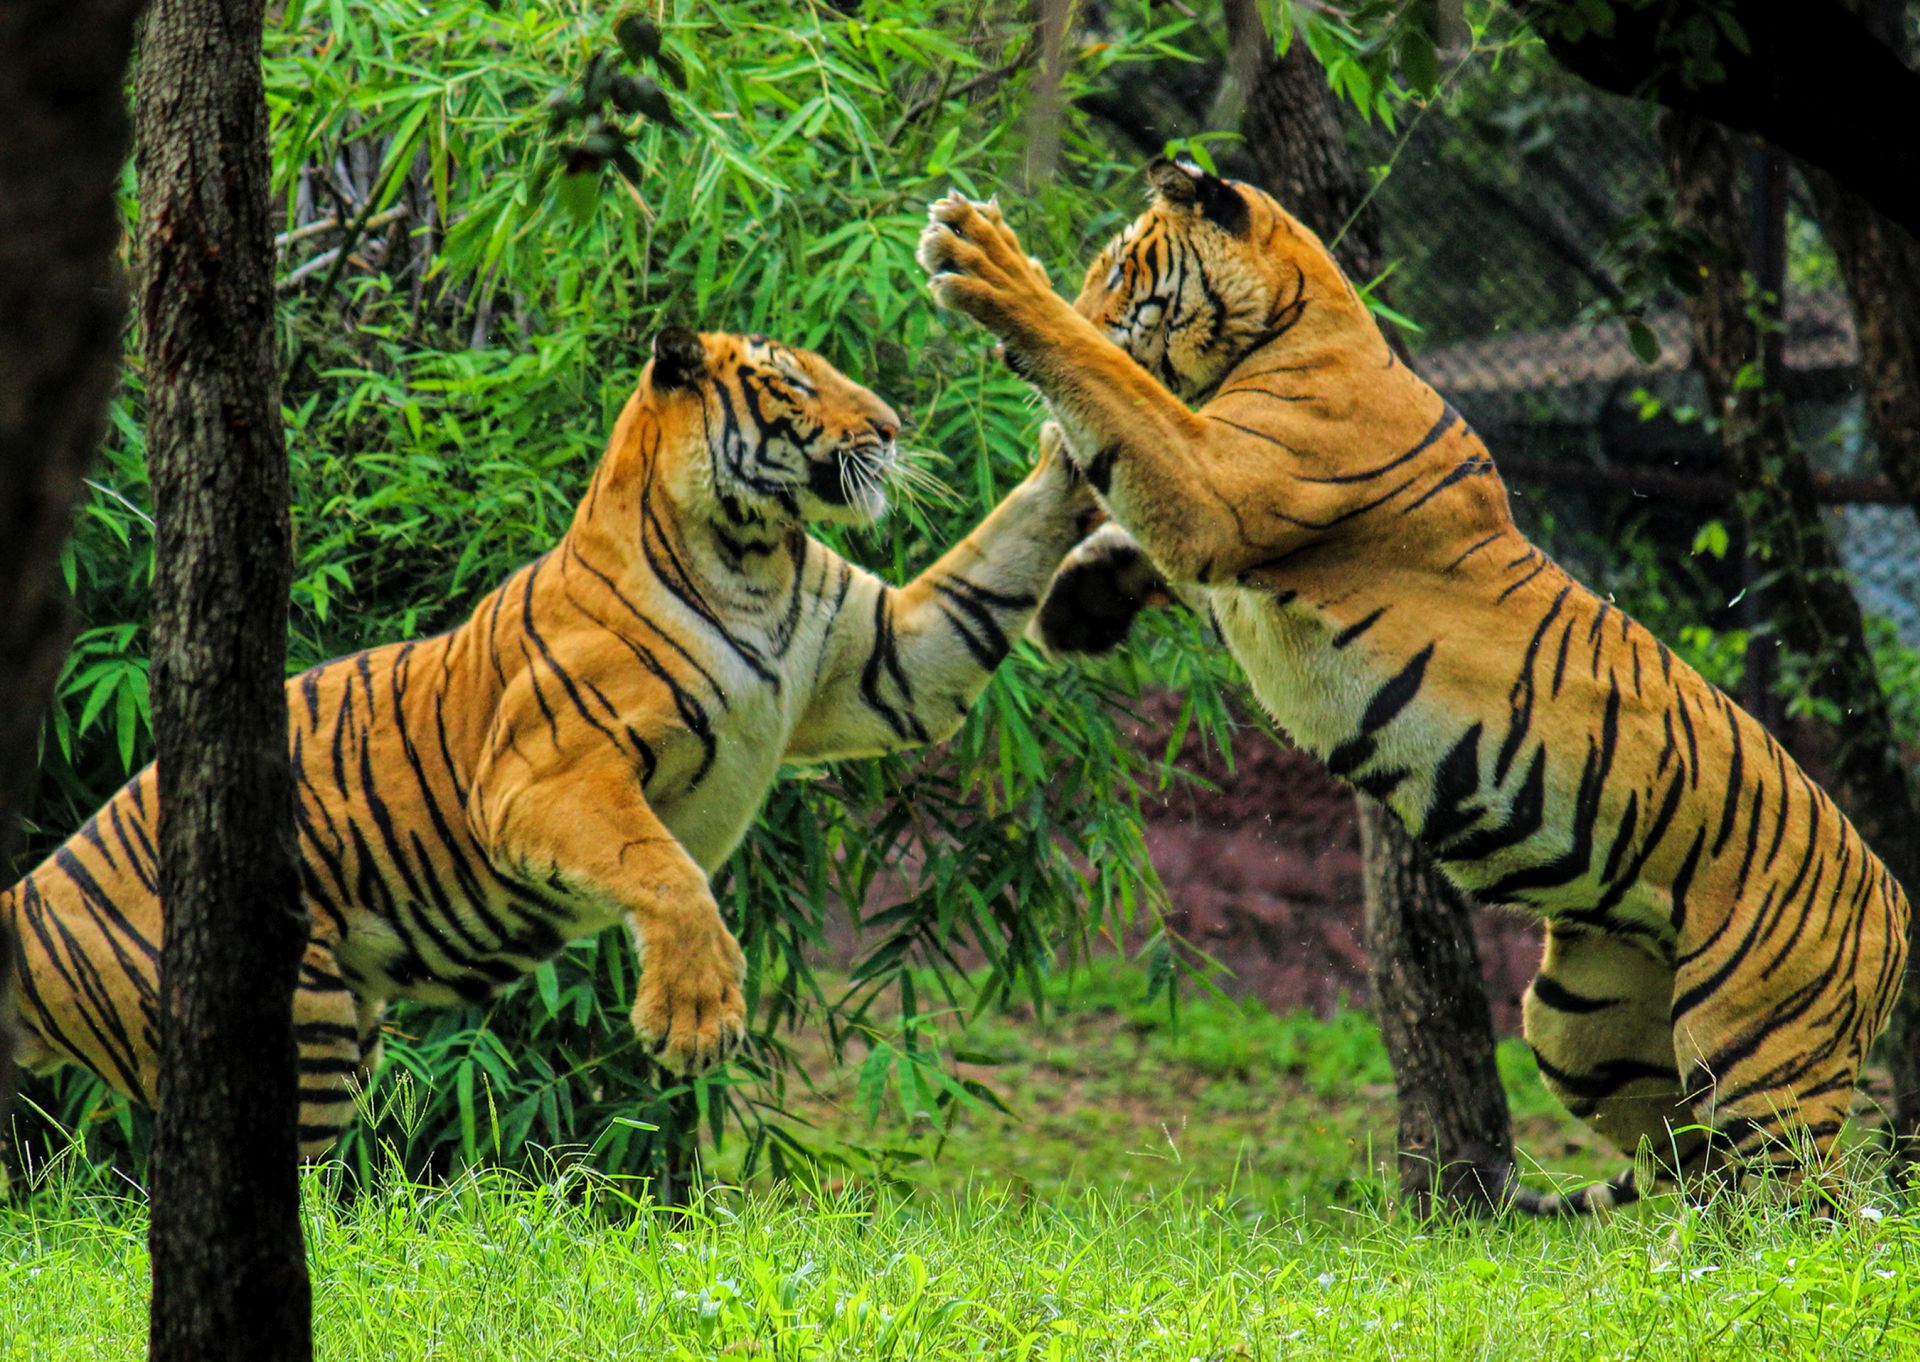 Animal trafficking: Bangladesh tigers include 33